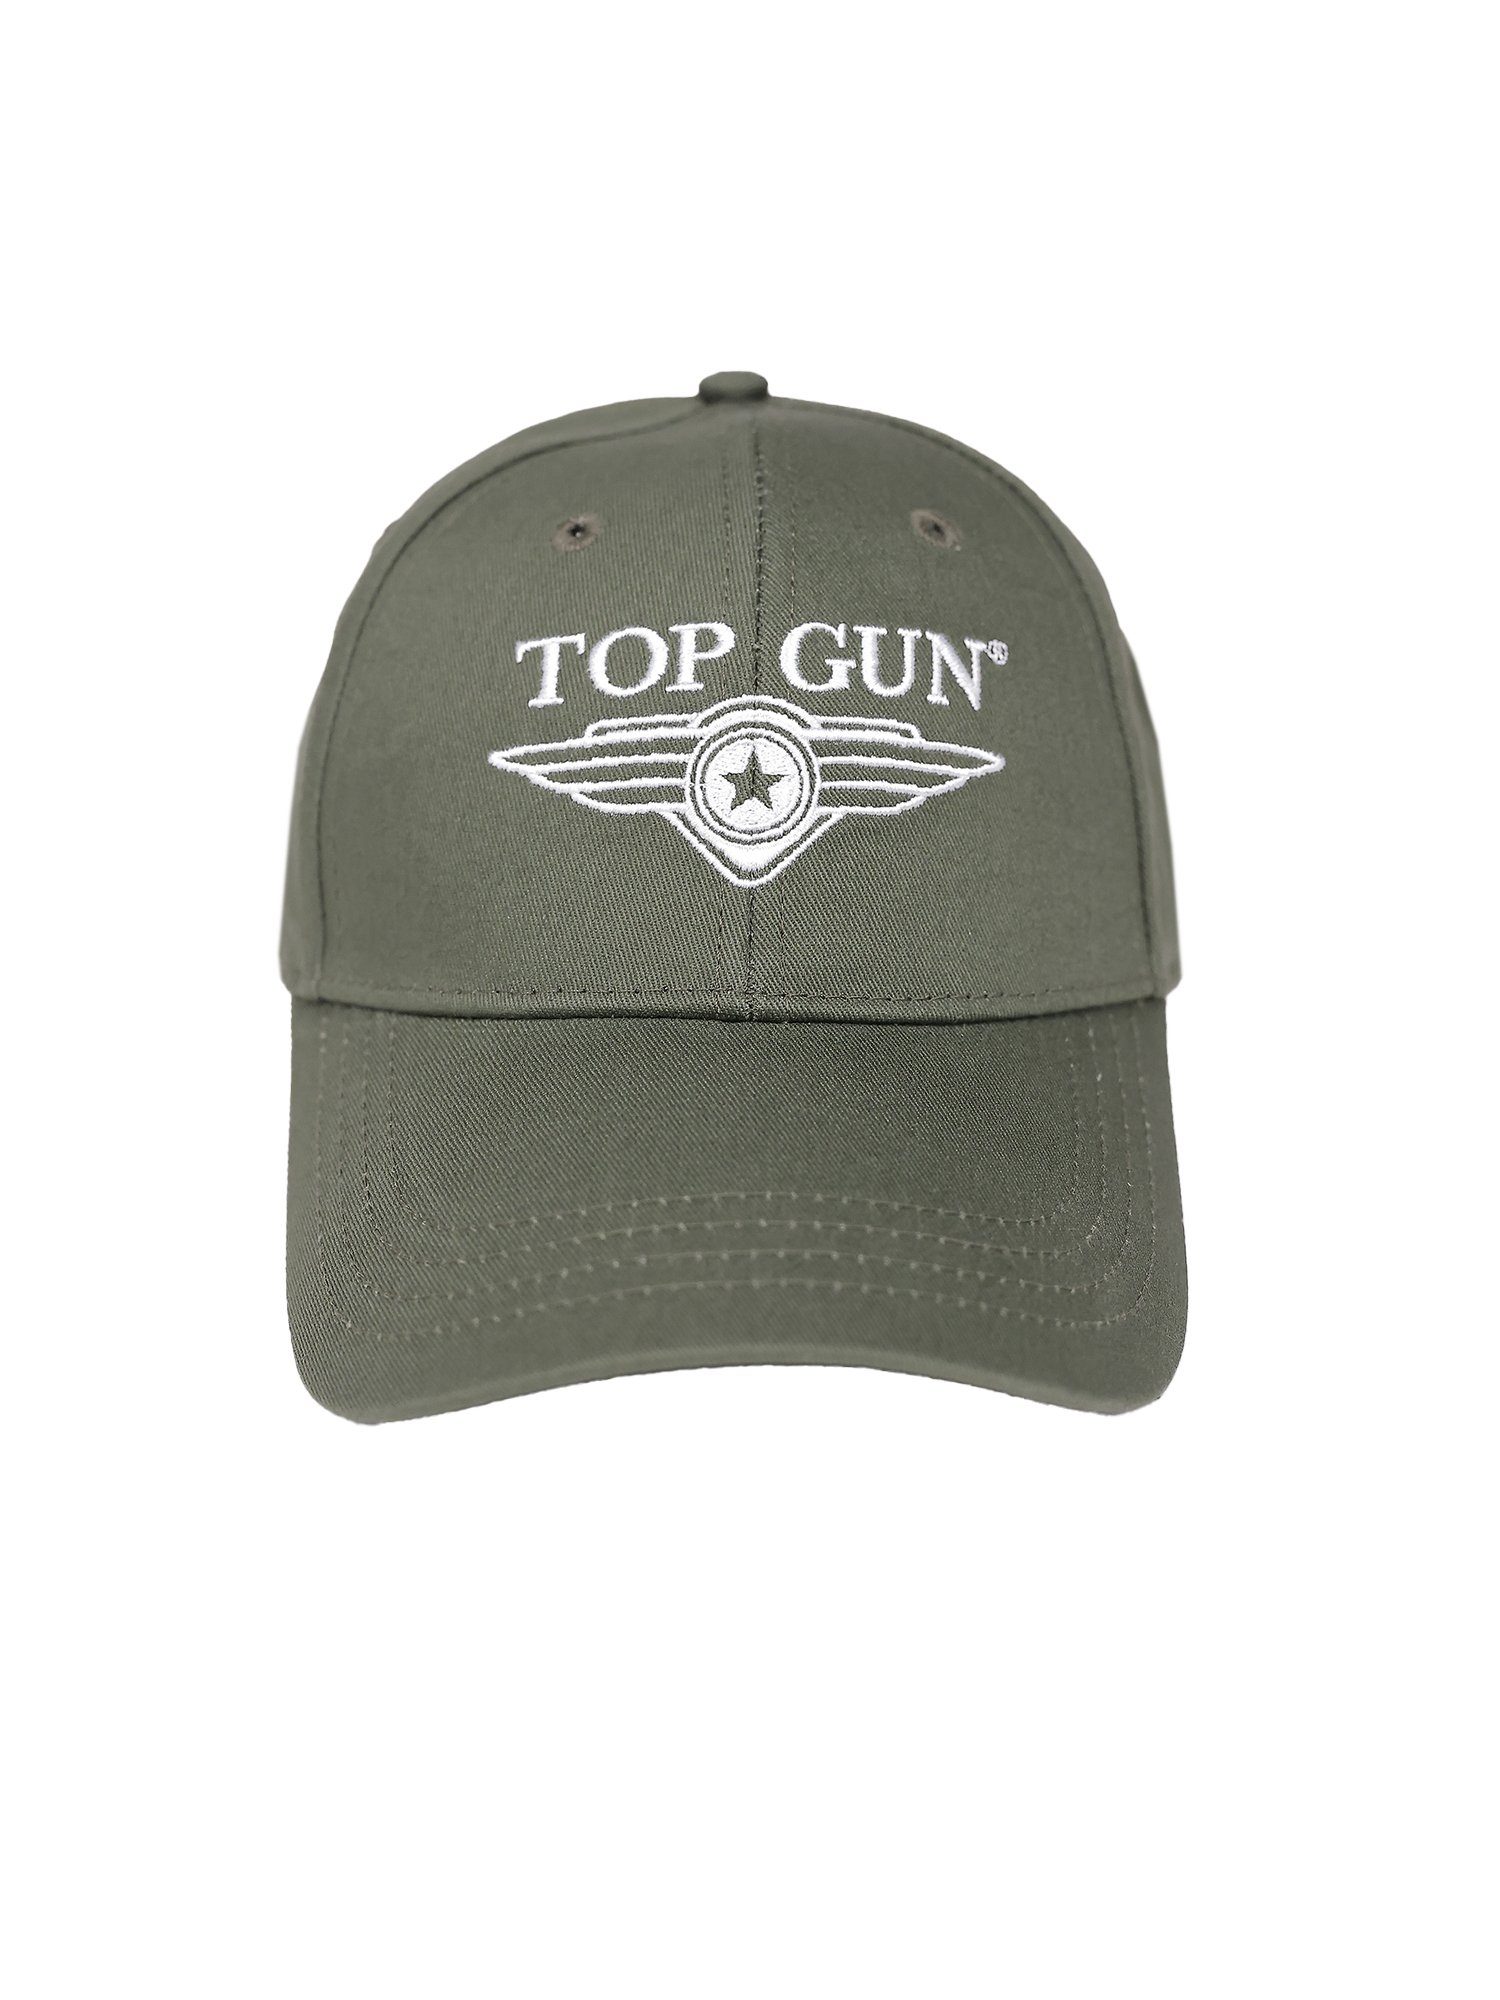 Cap GUN TG22013 grau Snapback TOP